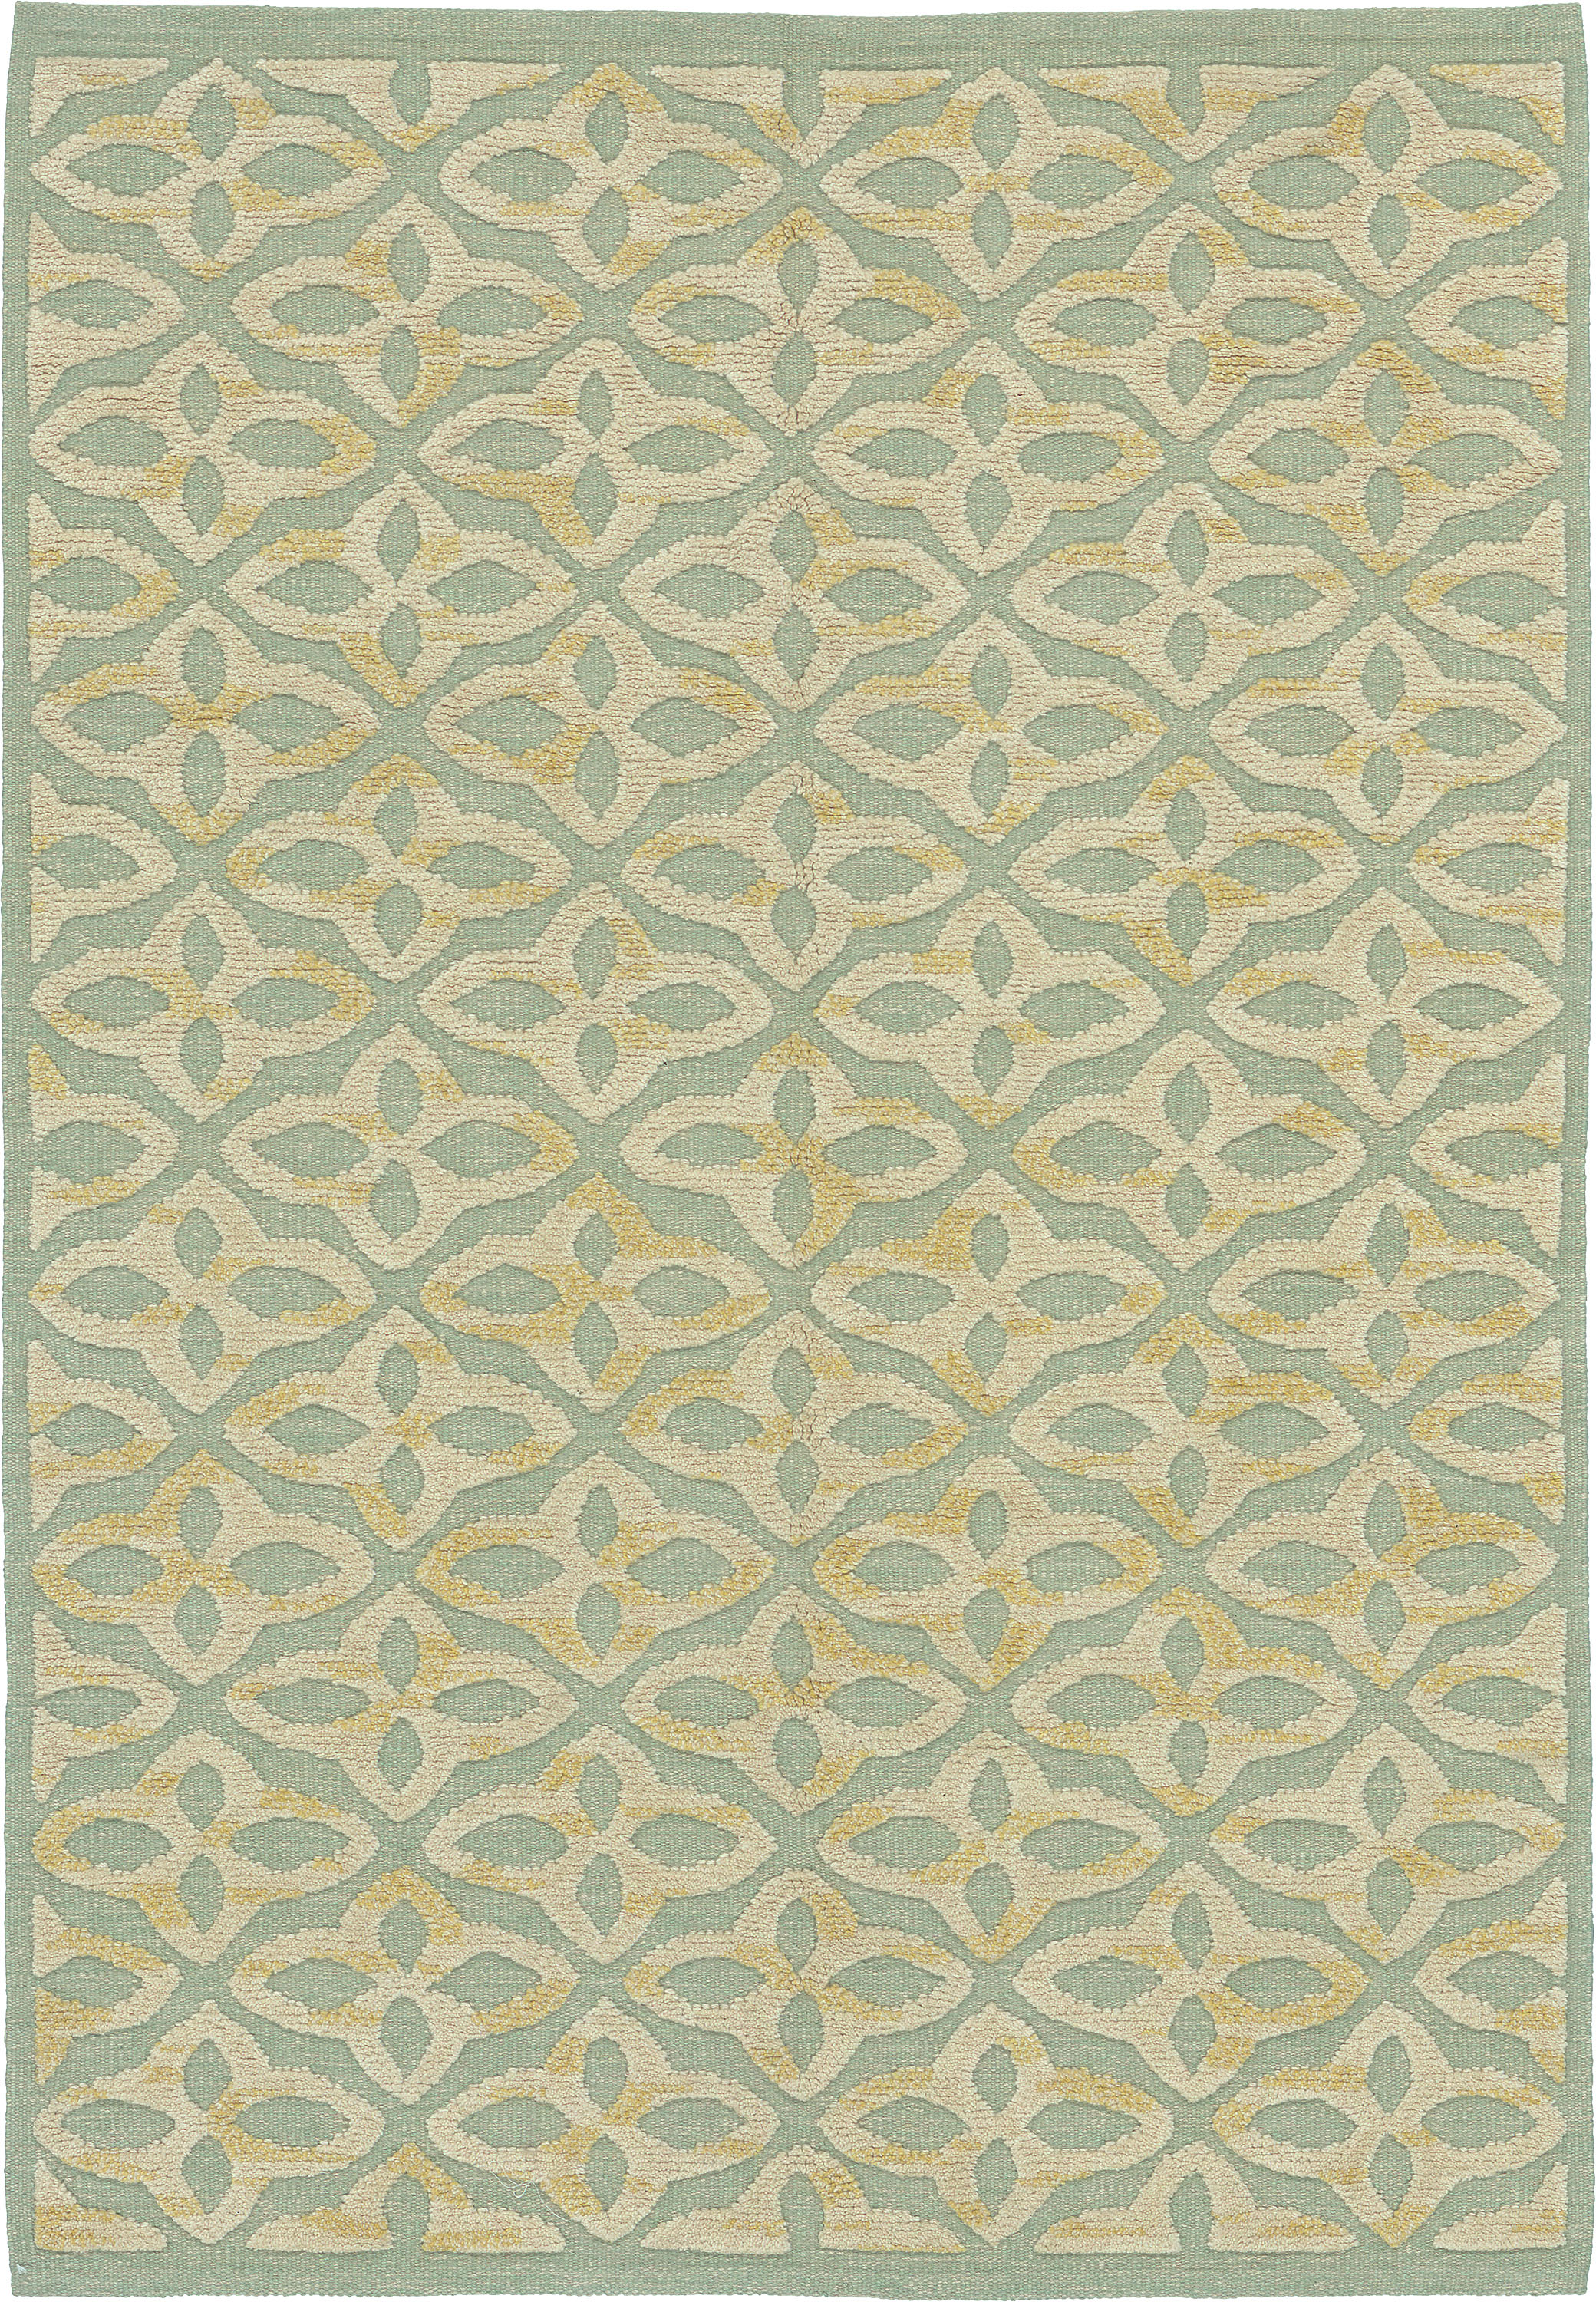 Evita Design | Custom Swedish Pile and Flat Weave Carpet | FJ Hakimian | Carpet Gallery in NY